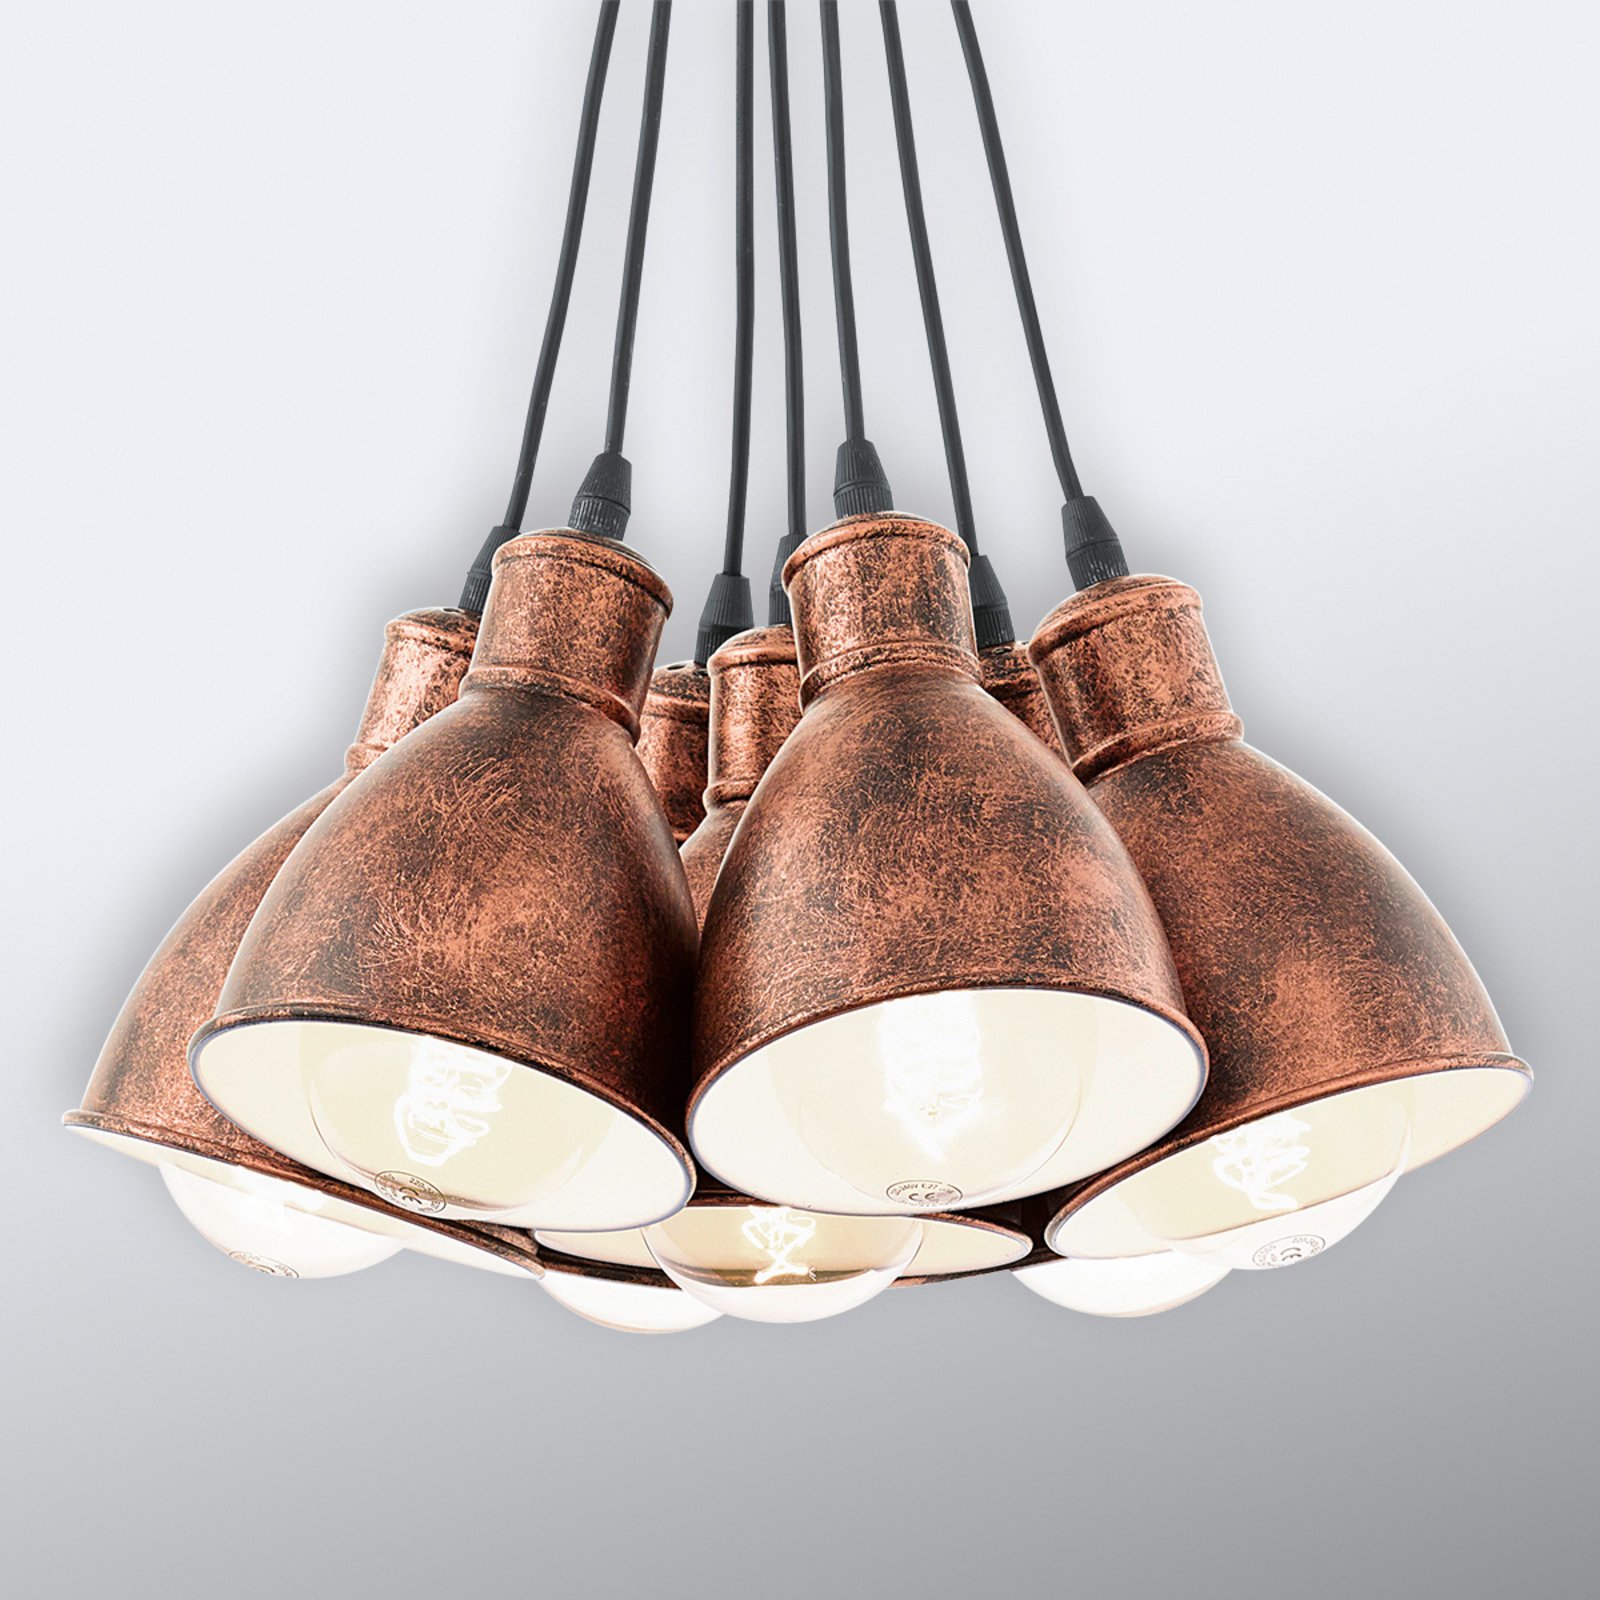 Pendant light Priddy 1, seven-bulb, antique copper